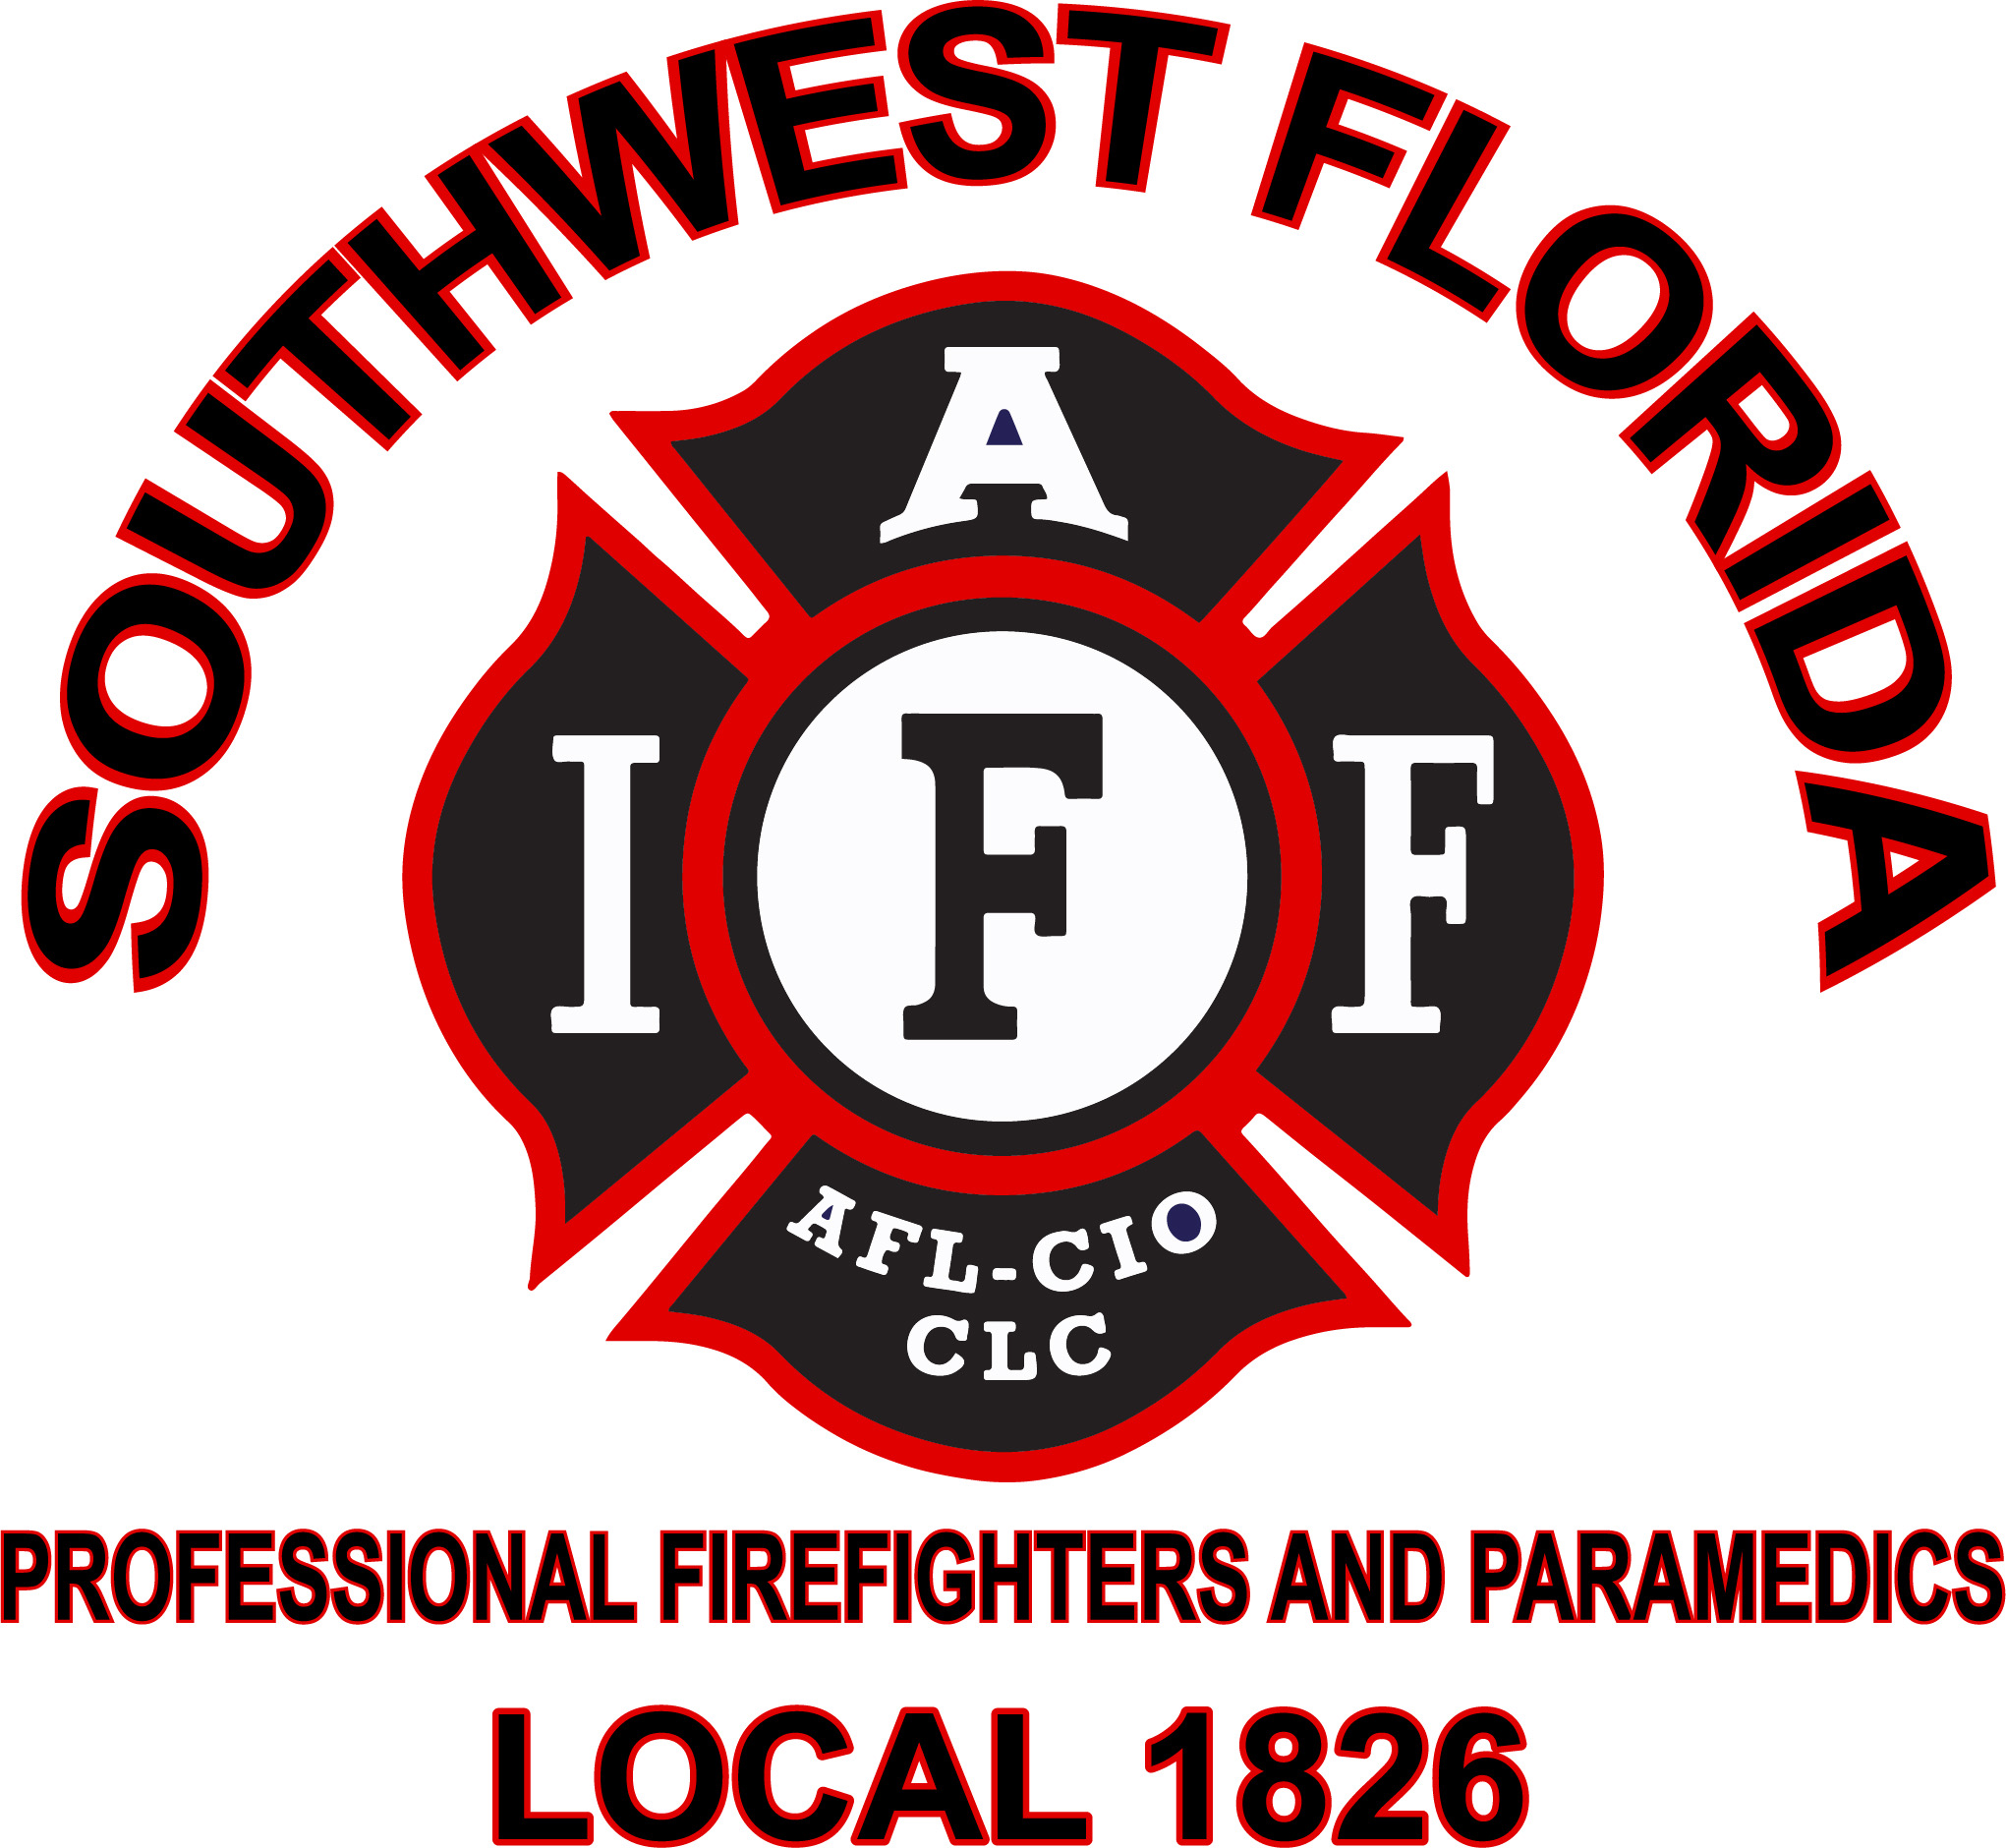 Leroy Nottingham SWFL Firefighter and Paramedic Benevolent Fund